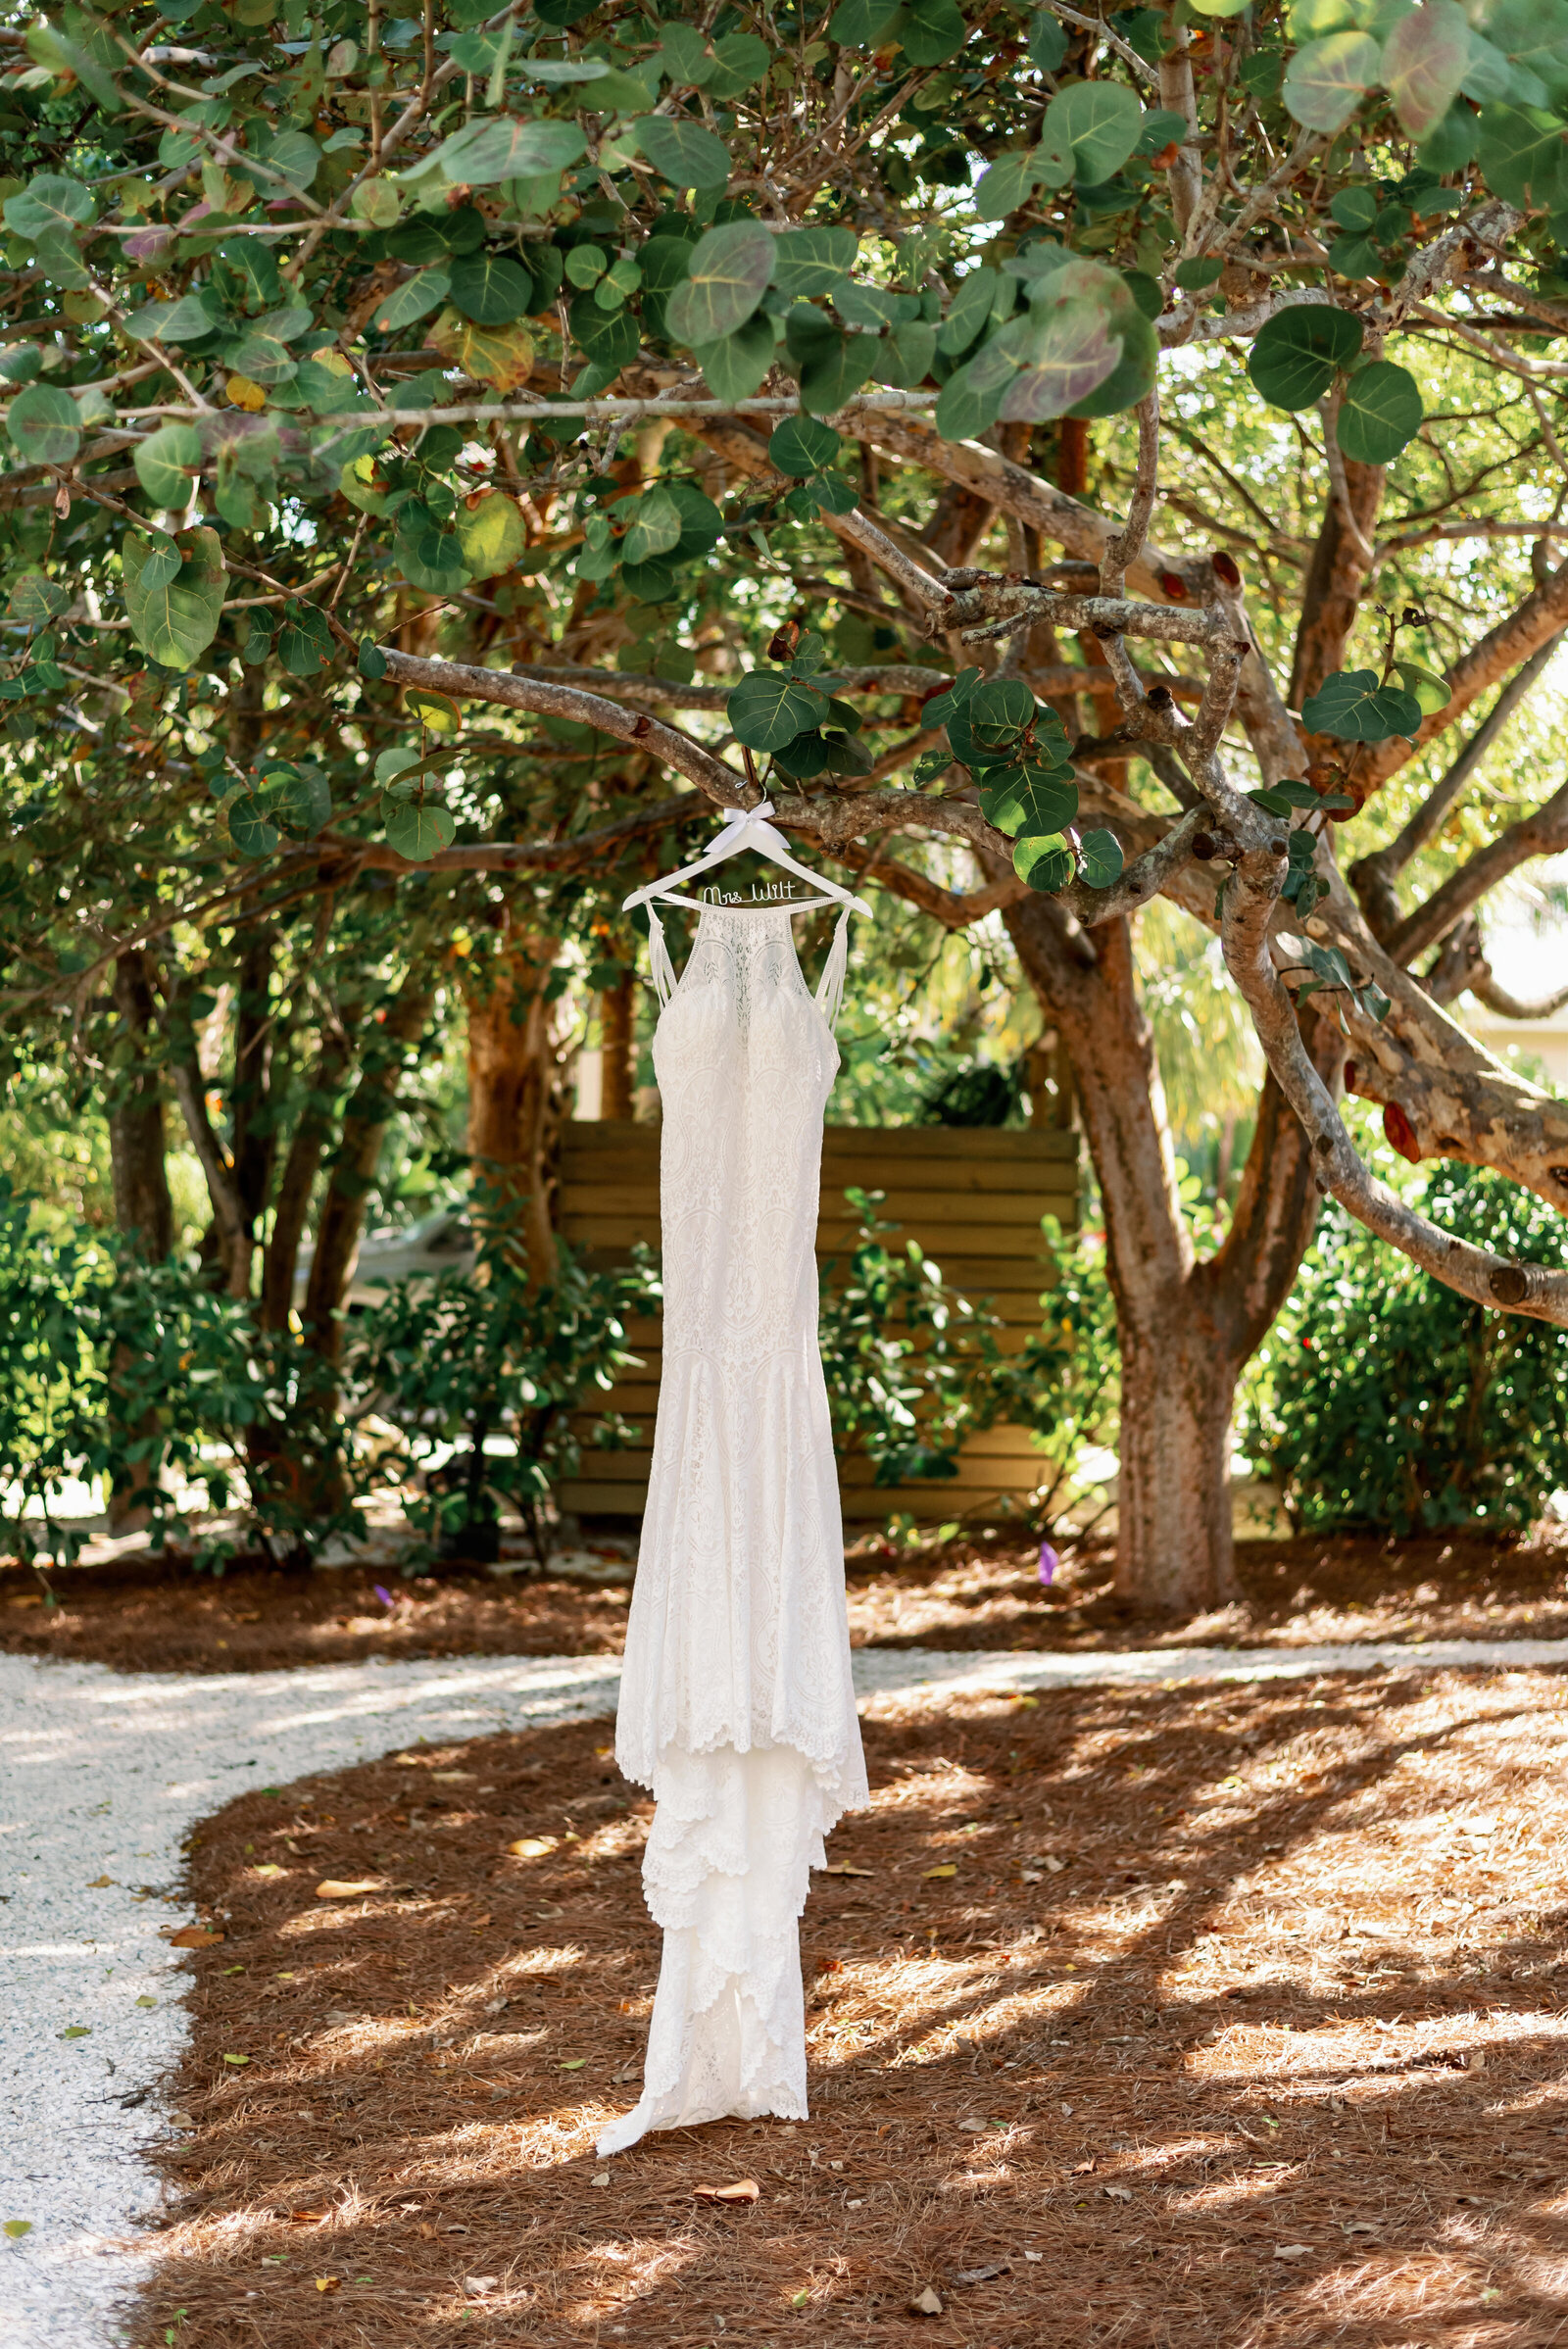 Wedding dress handing from a native Florida Sea Grape tree